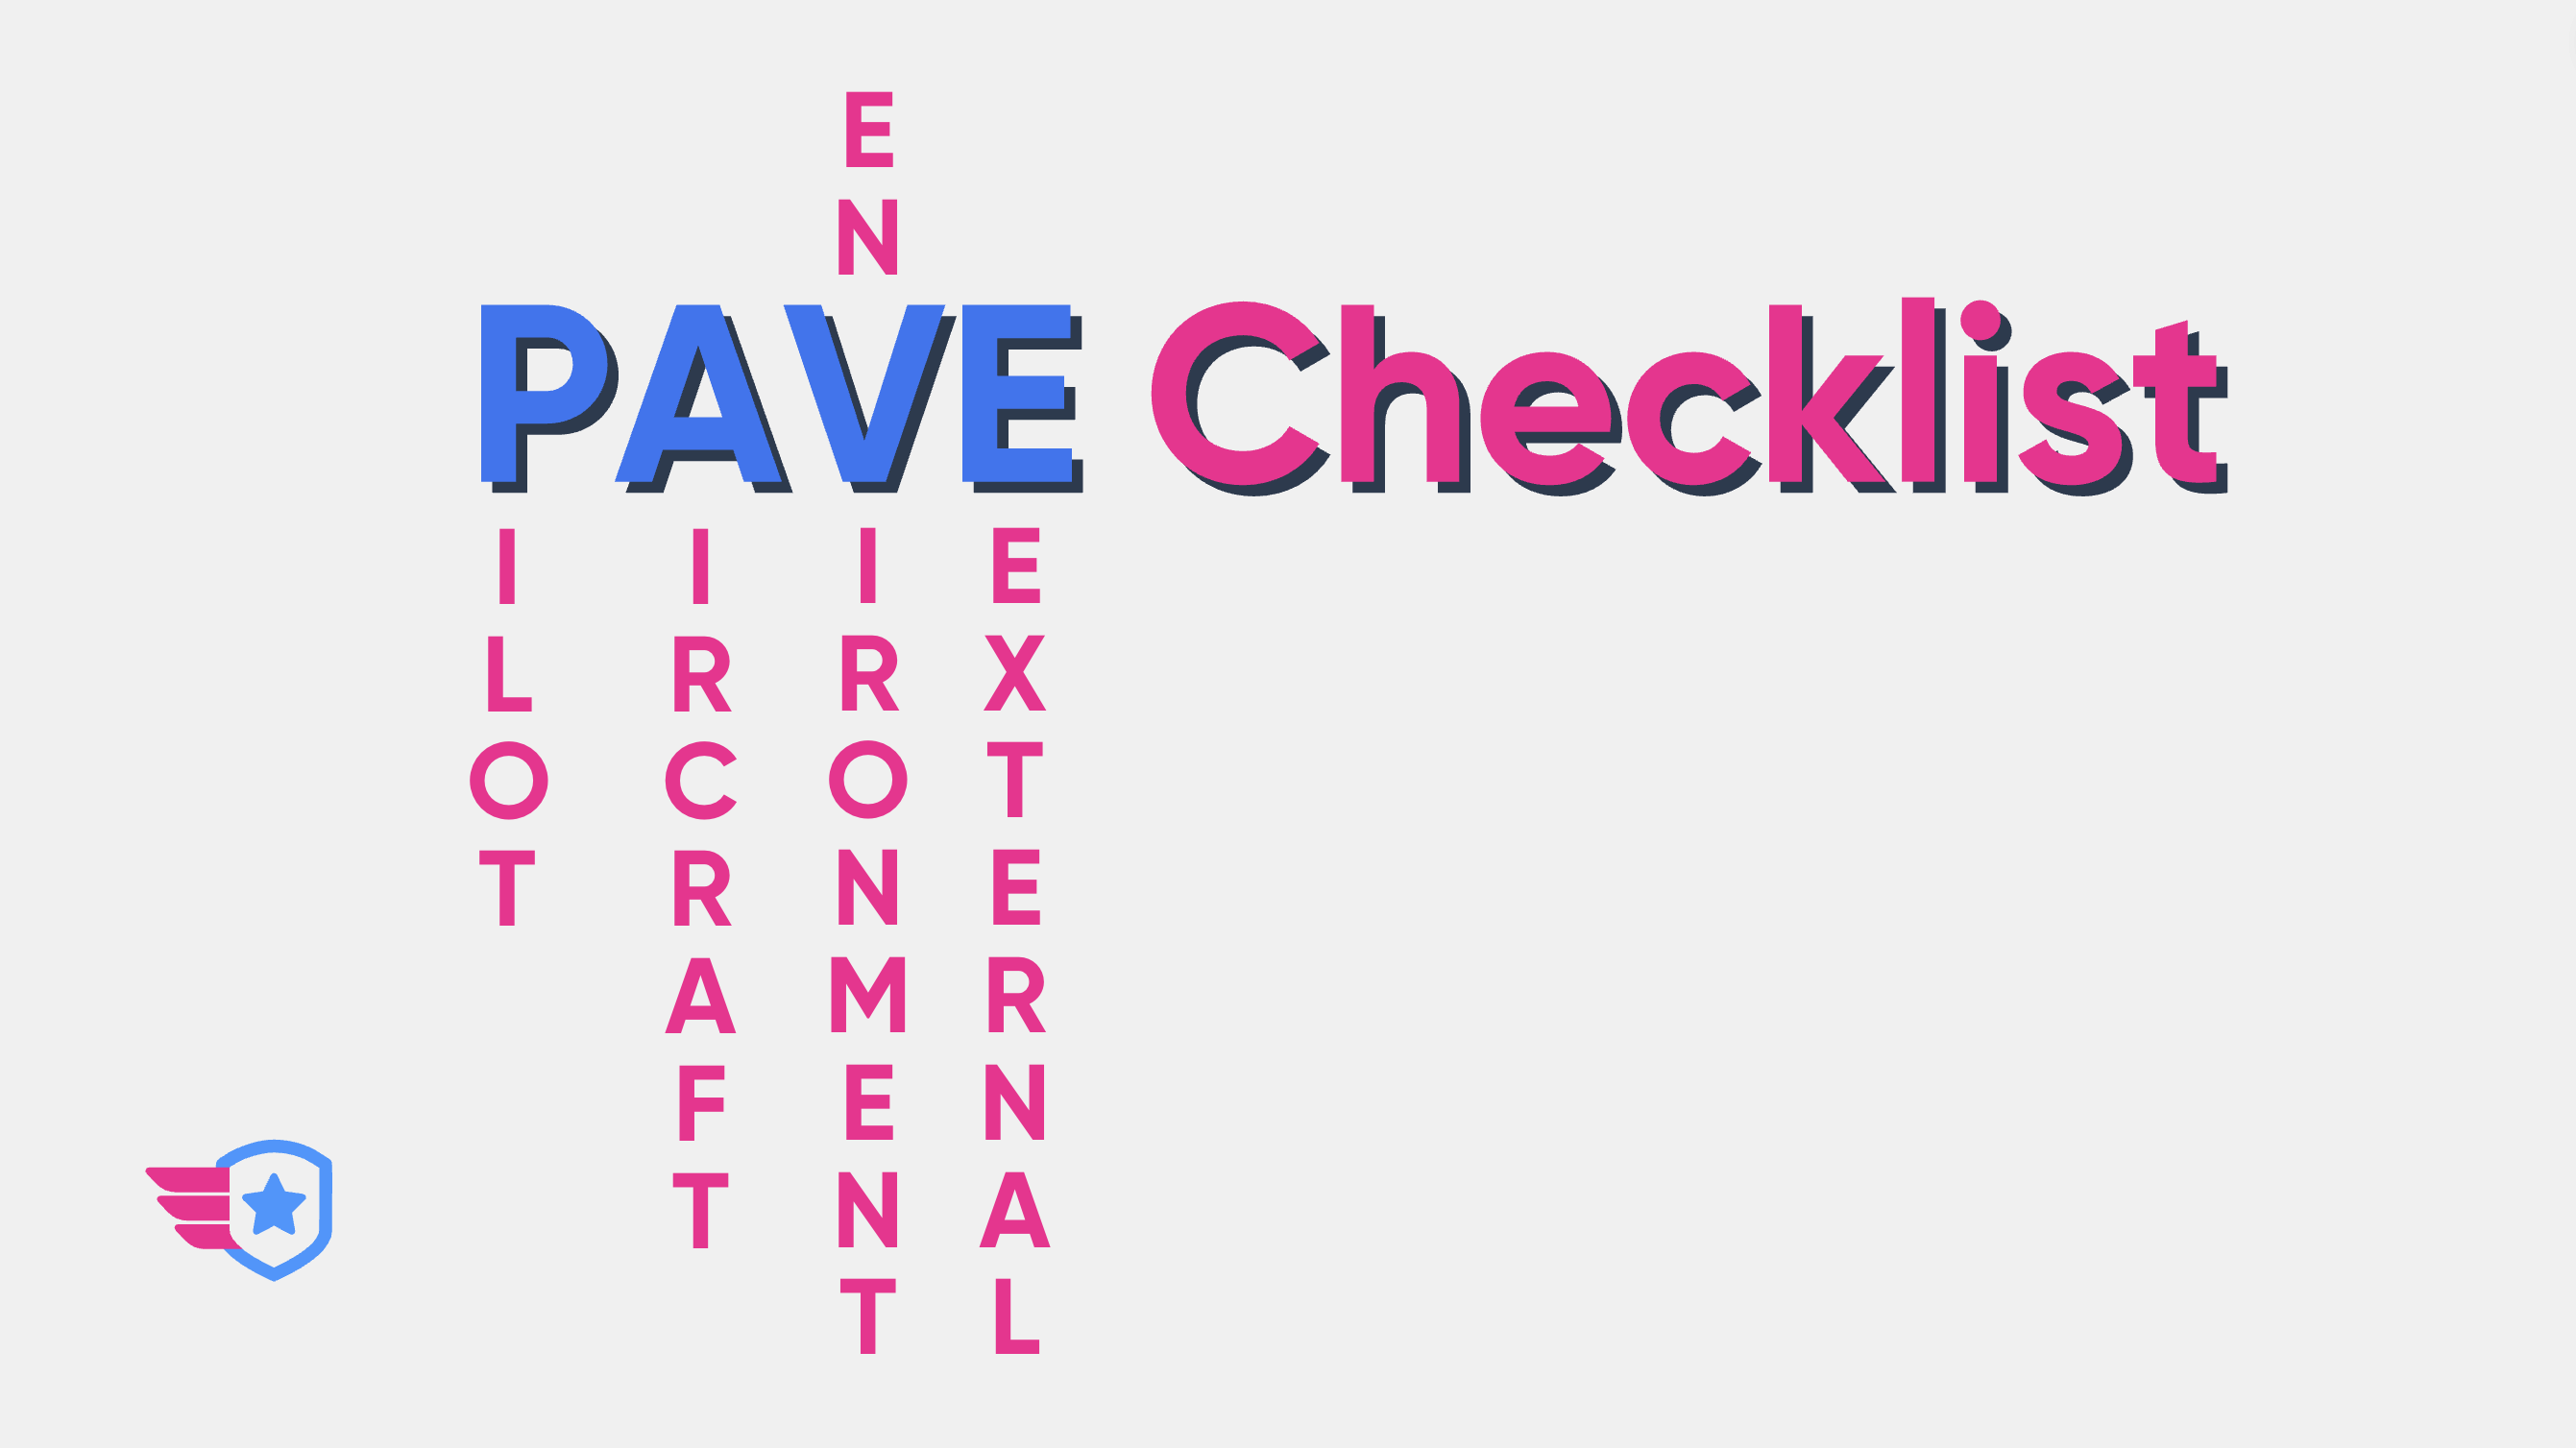 PAVE Checklist Explained